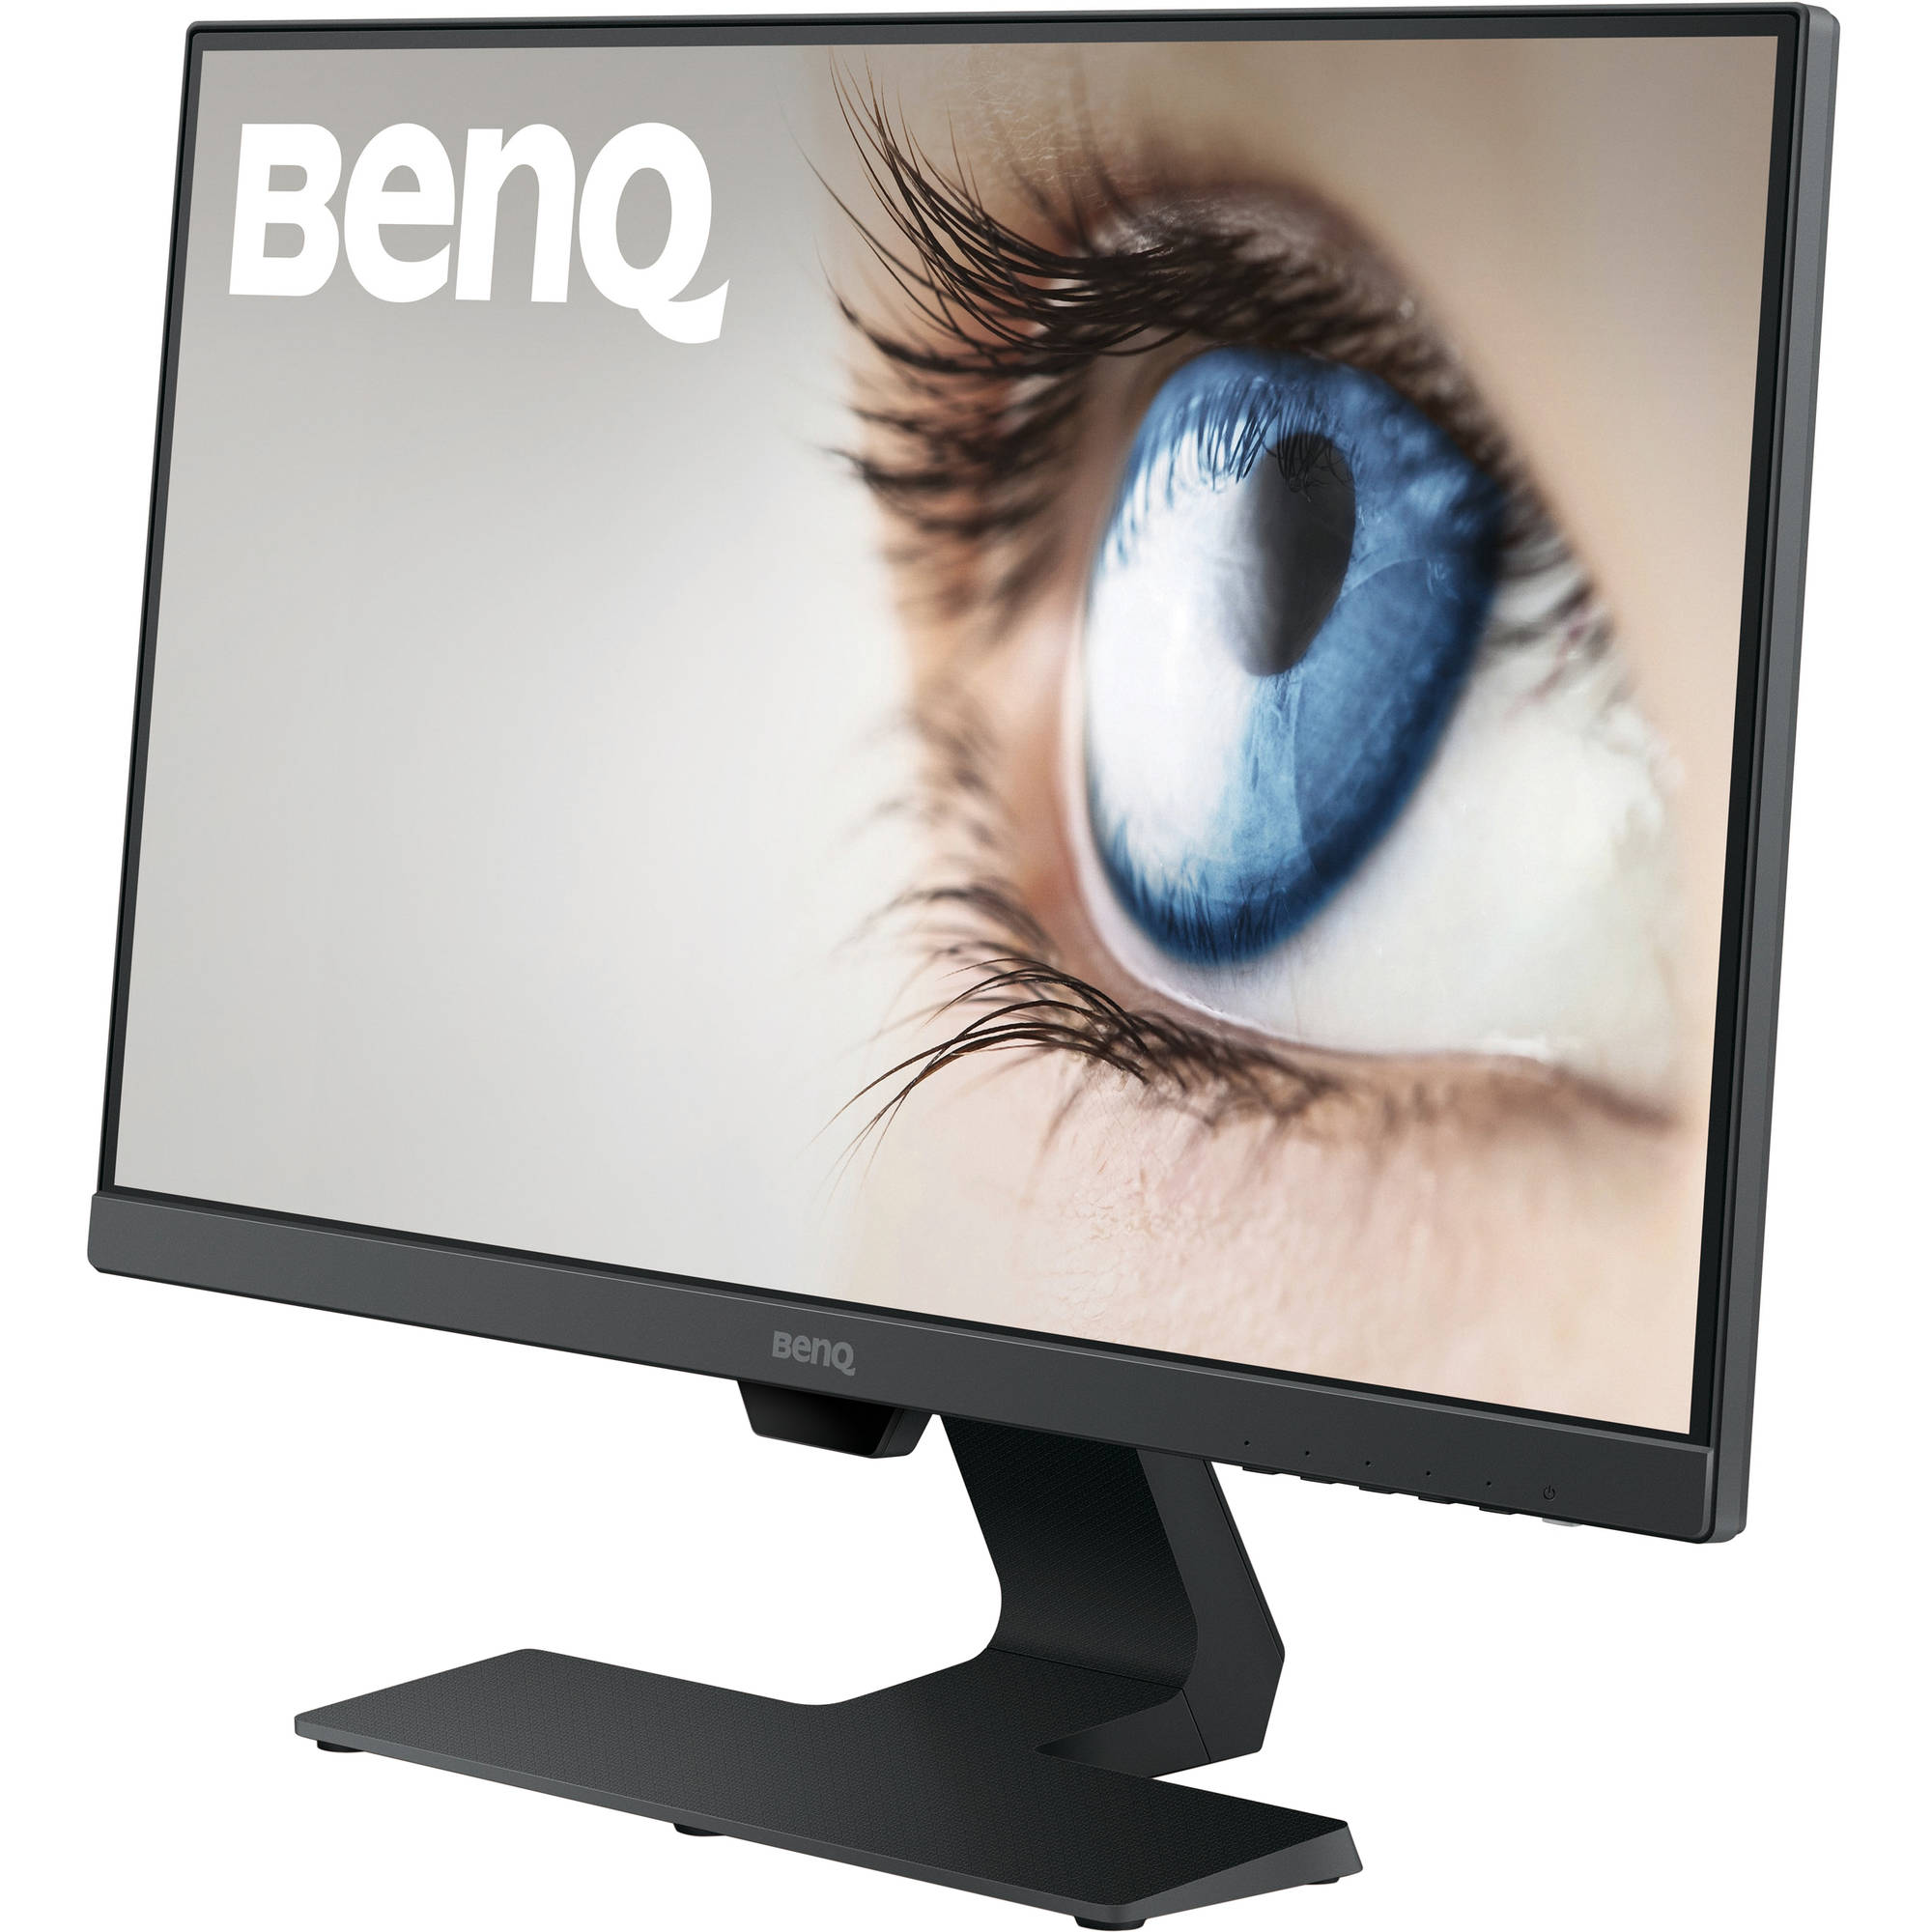 Benq Gw2480 23 8 16 9 Ips Monitor Gw2480 B H Photo Video